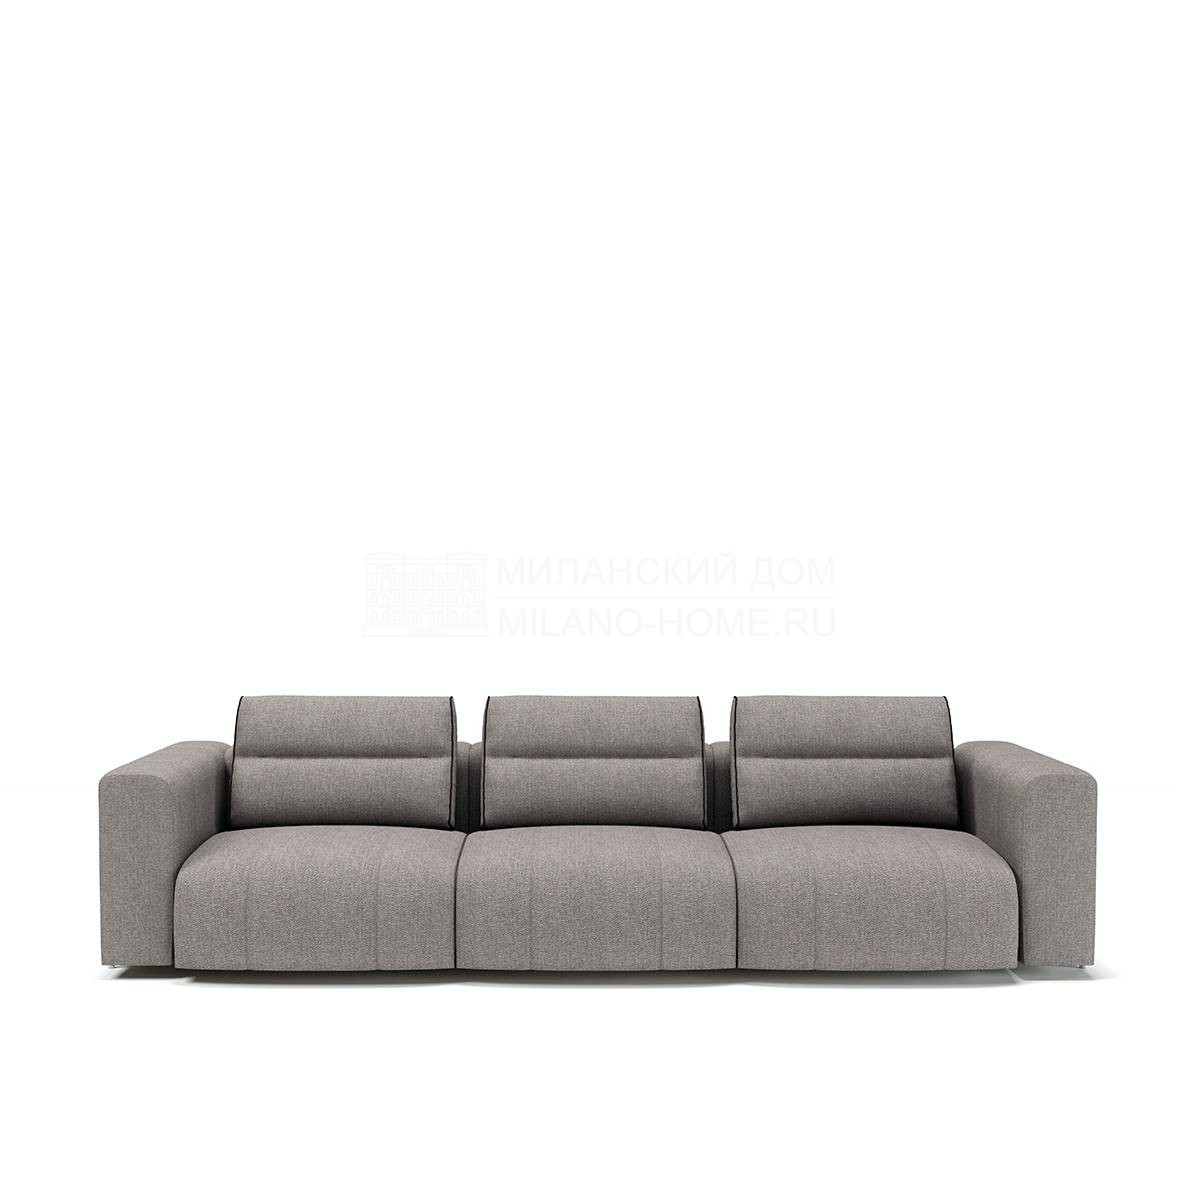 Прямой диван Bellagio sofa из Испании фабрики COLECCION ALEXANDRA